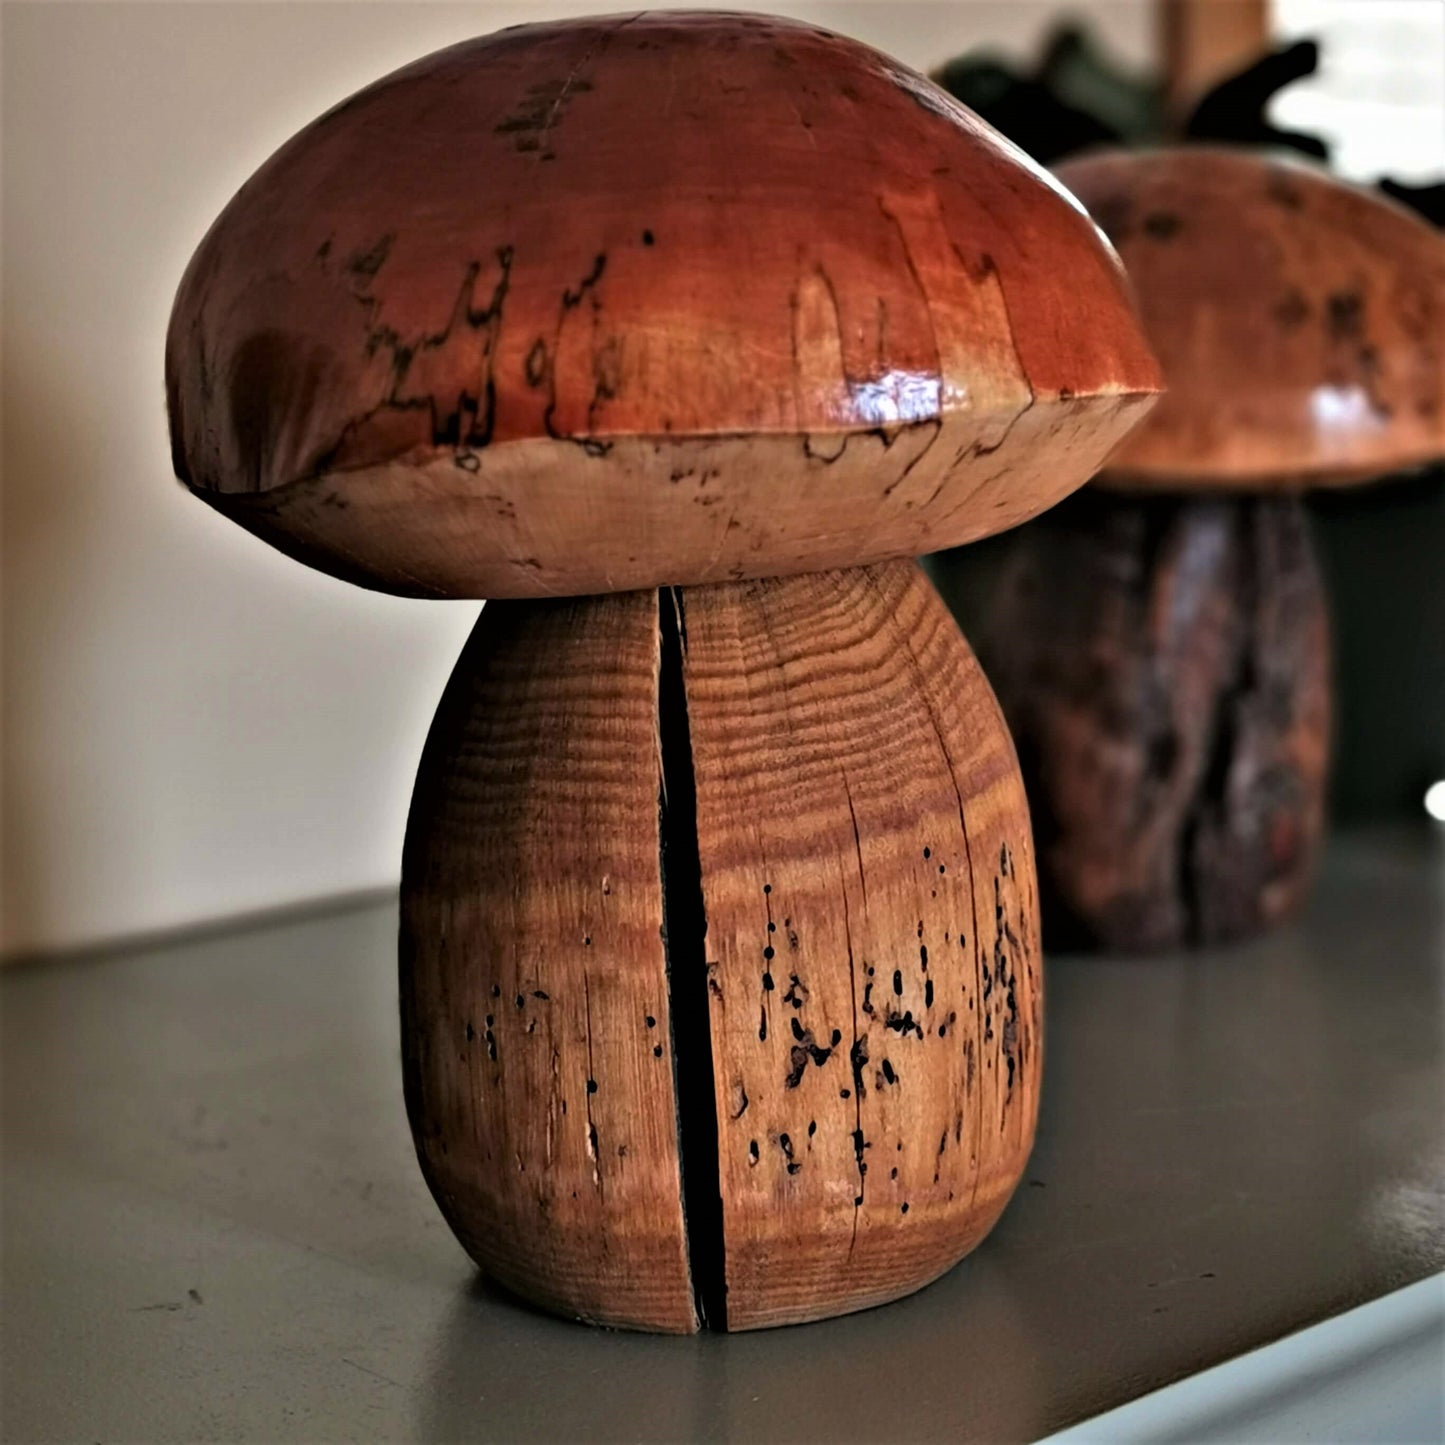 A handmade wooden mushroom toadstool figurine No.2 | Penny Bun